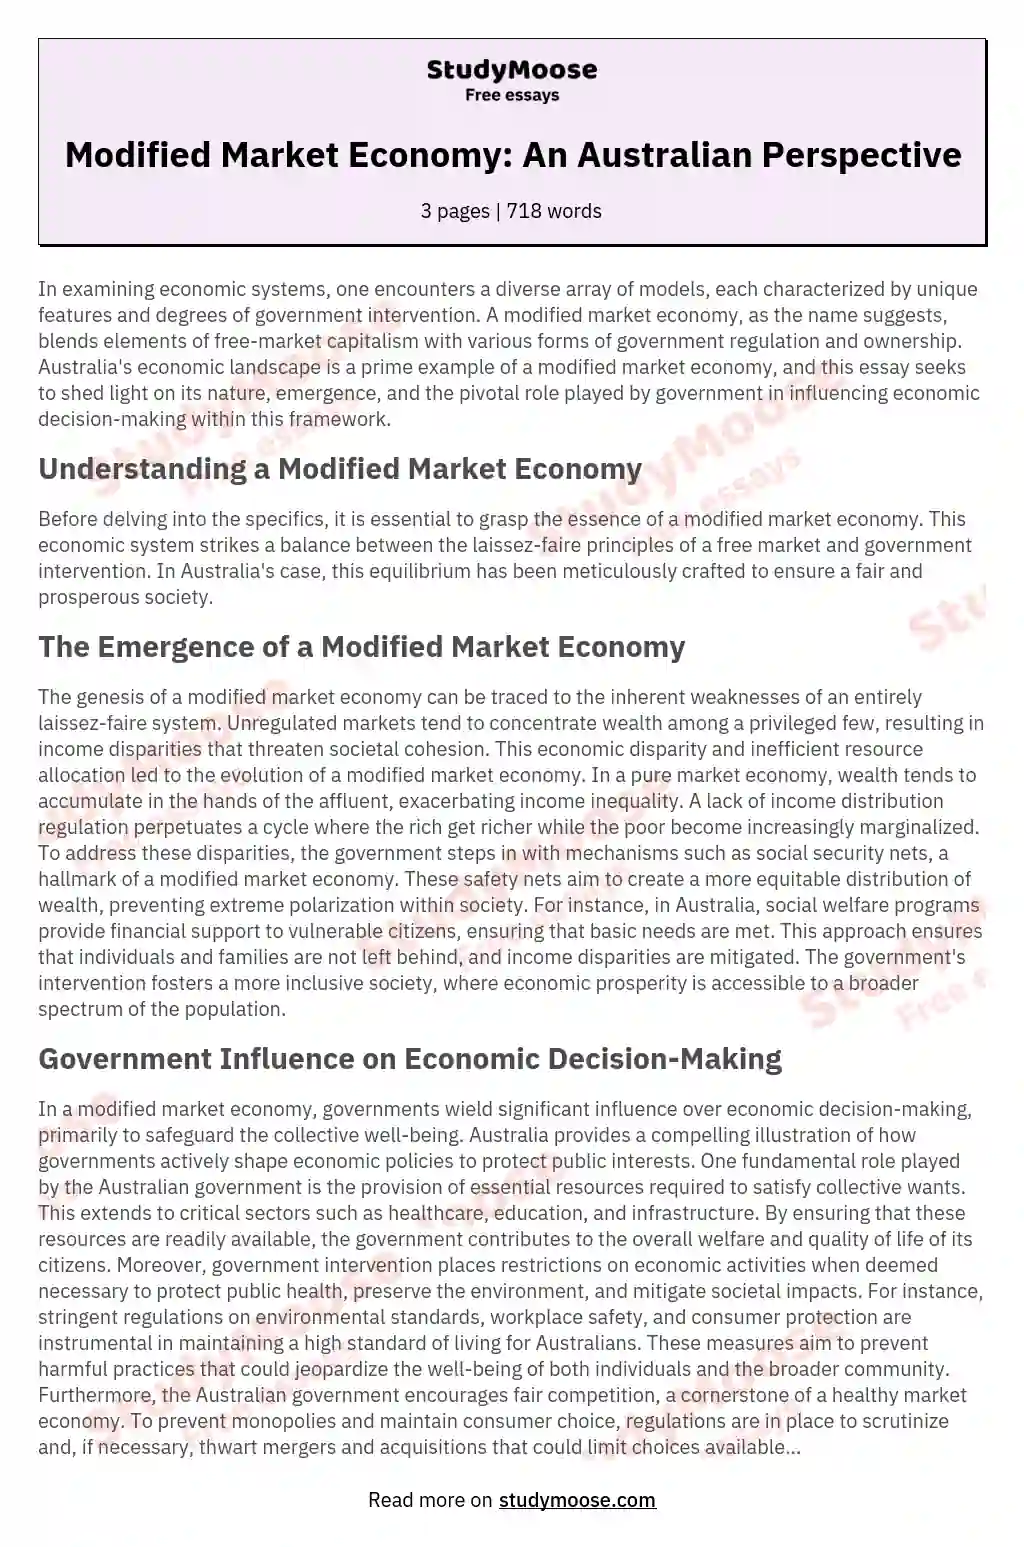 Modified Market Economy: An Australian Perspective essay